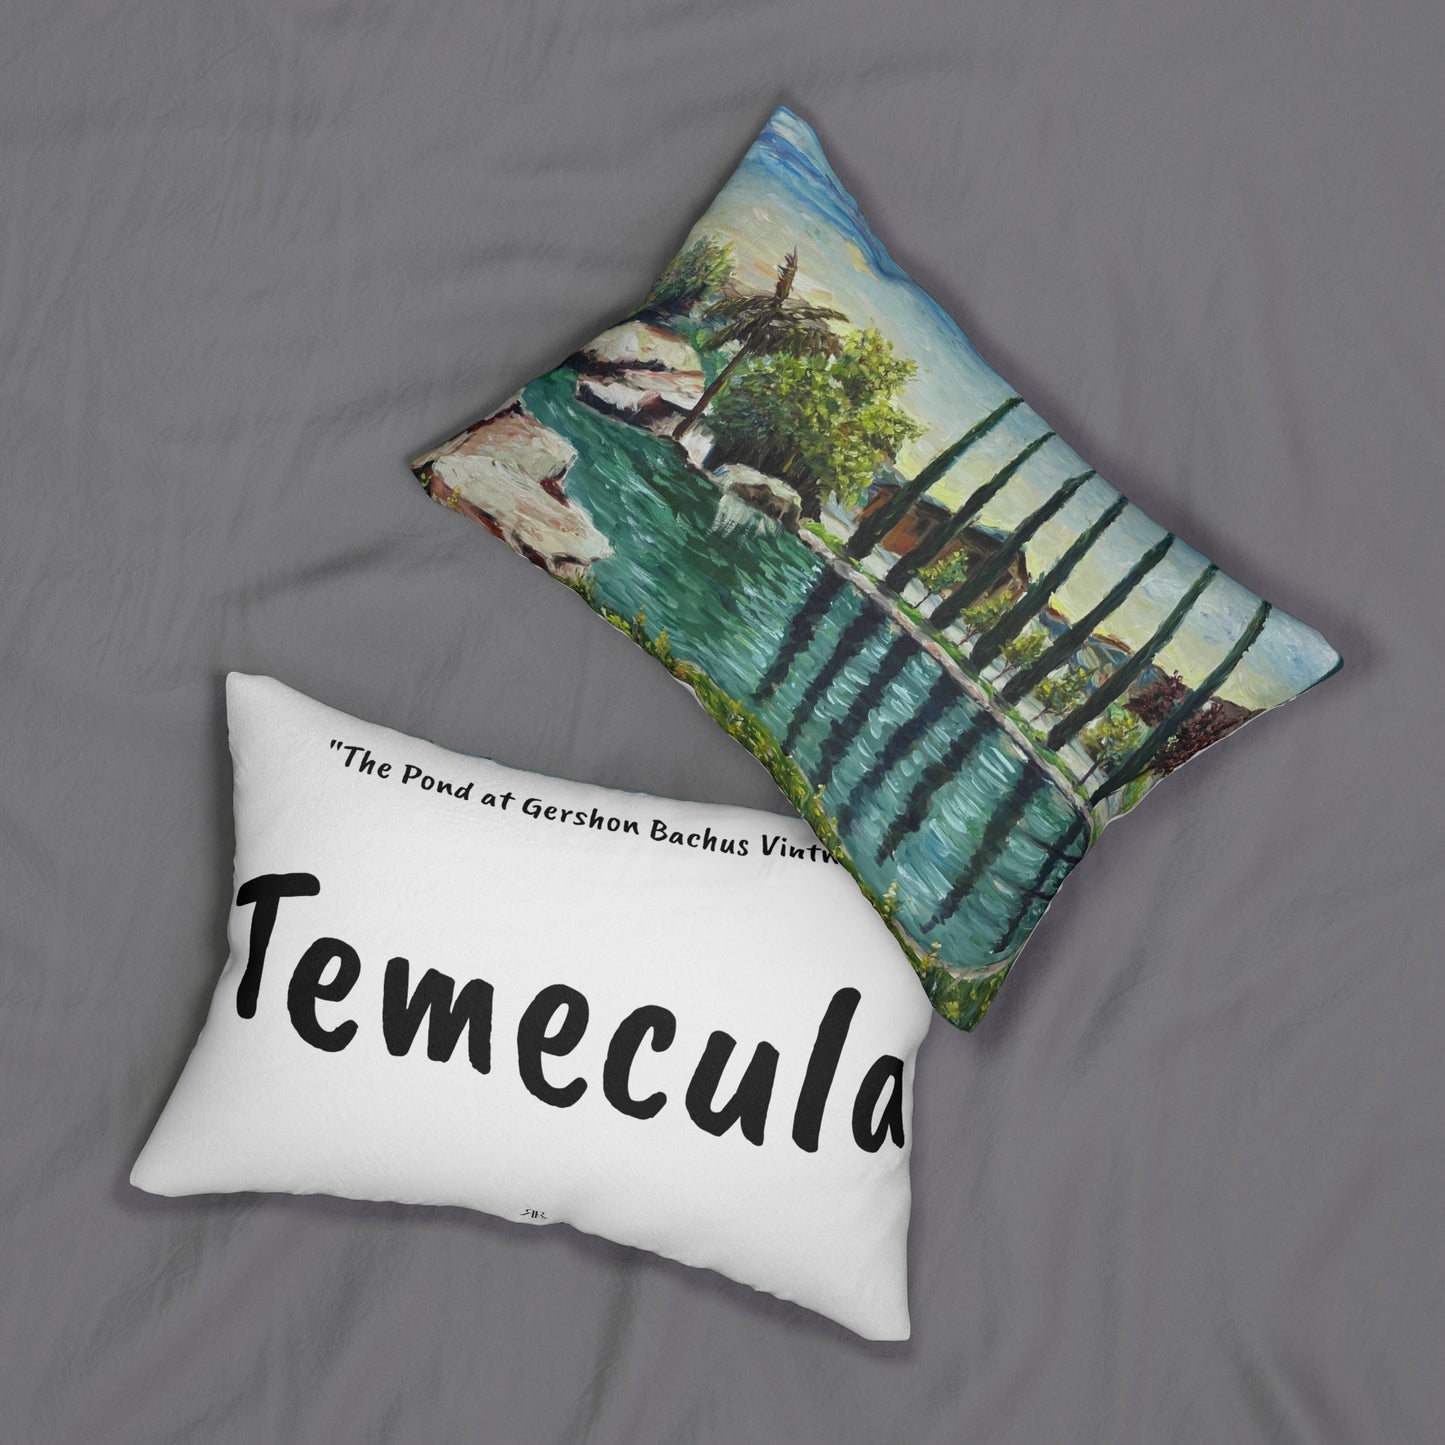 Temecula Lumbar Pillow featuring "The Pond at Gershon Bachus Vintners" painting and "Temecula"